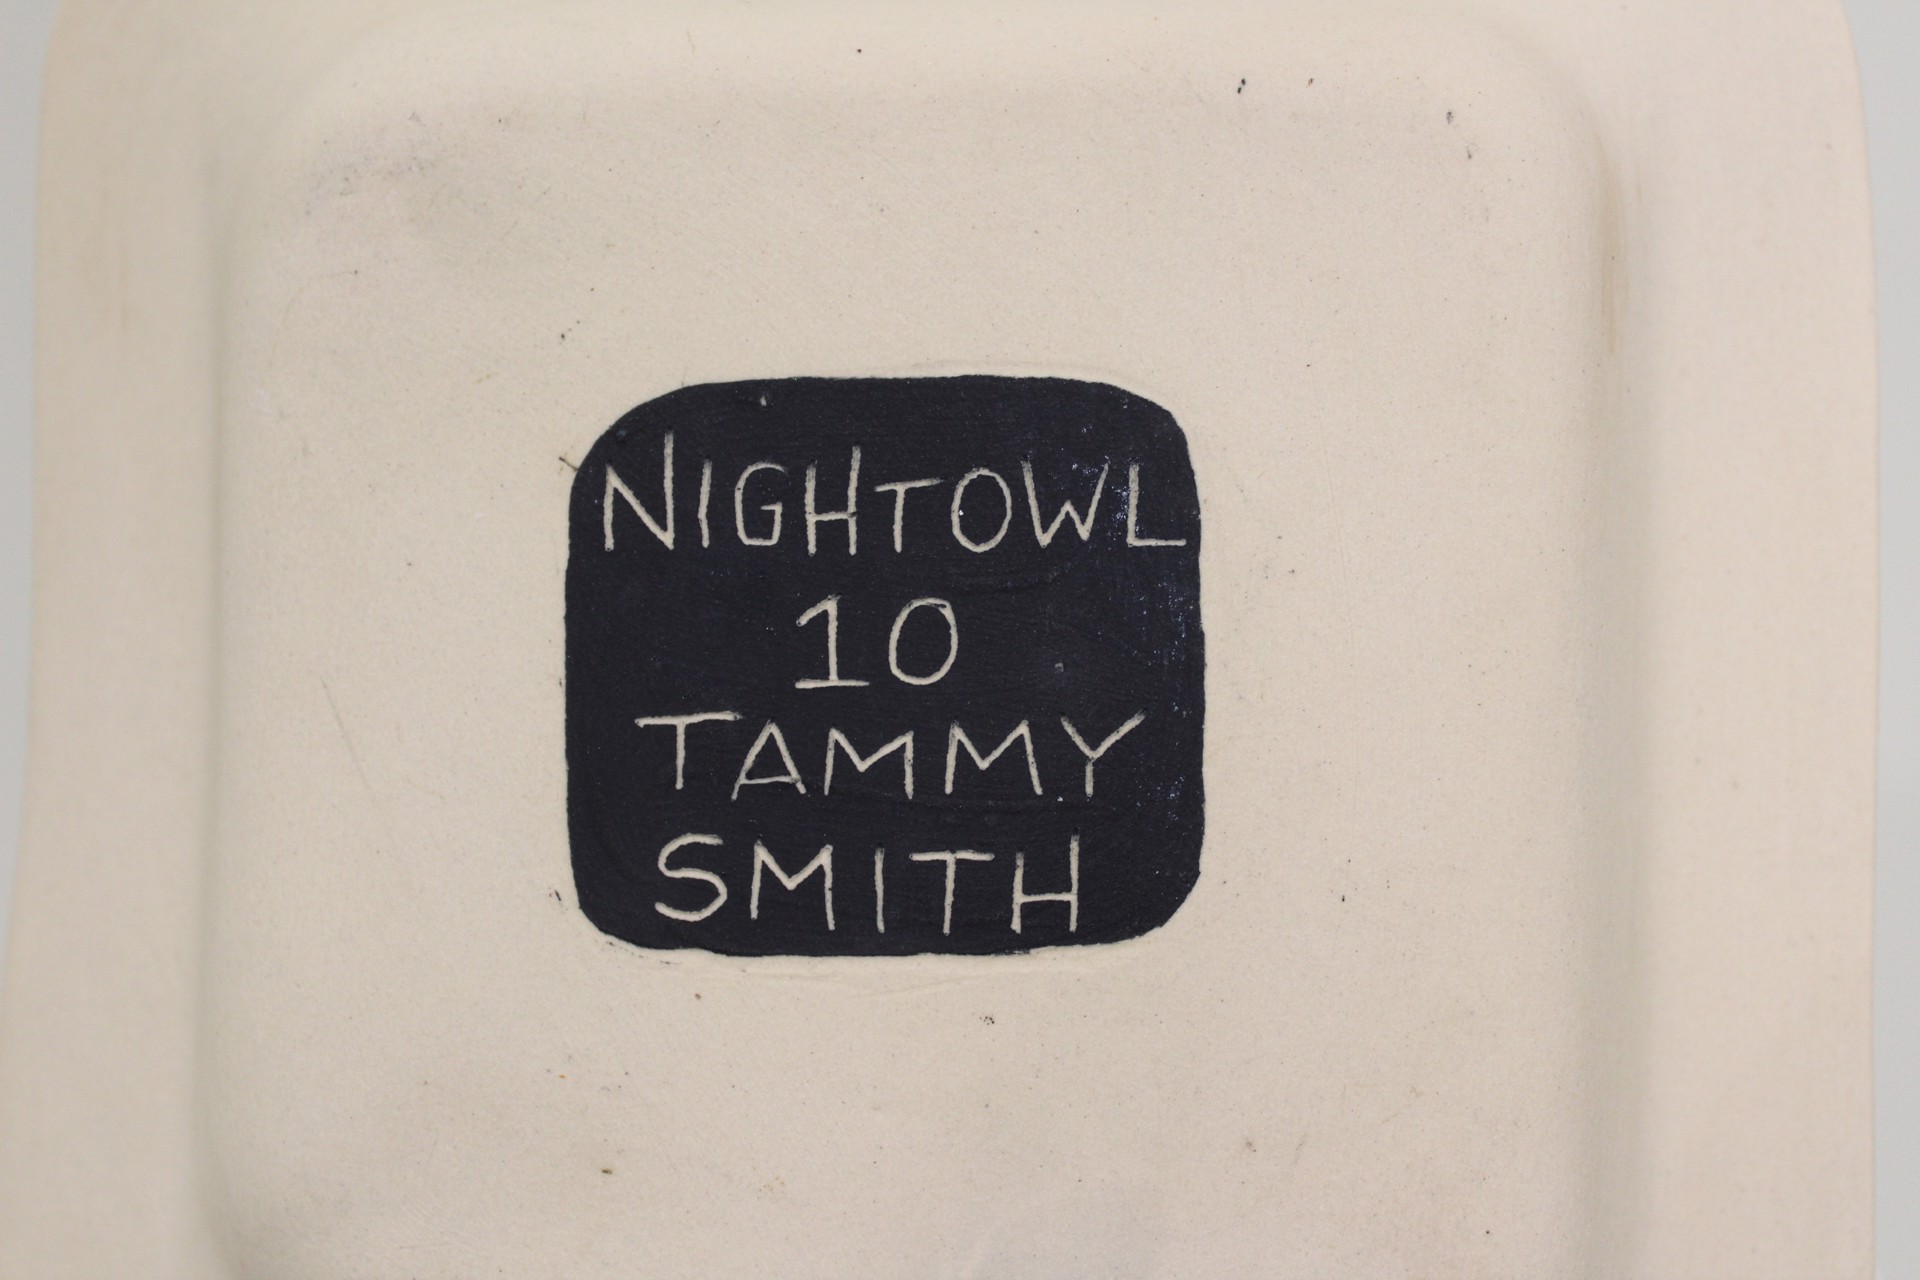 Small Owl Plate - Night Owl 10 by Tammy Smith